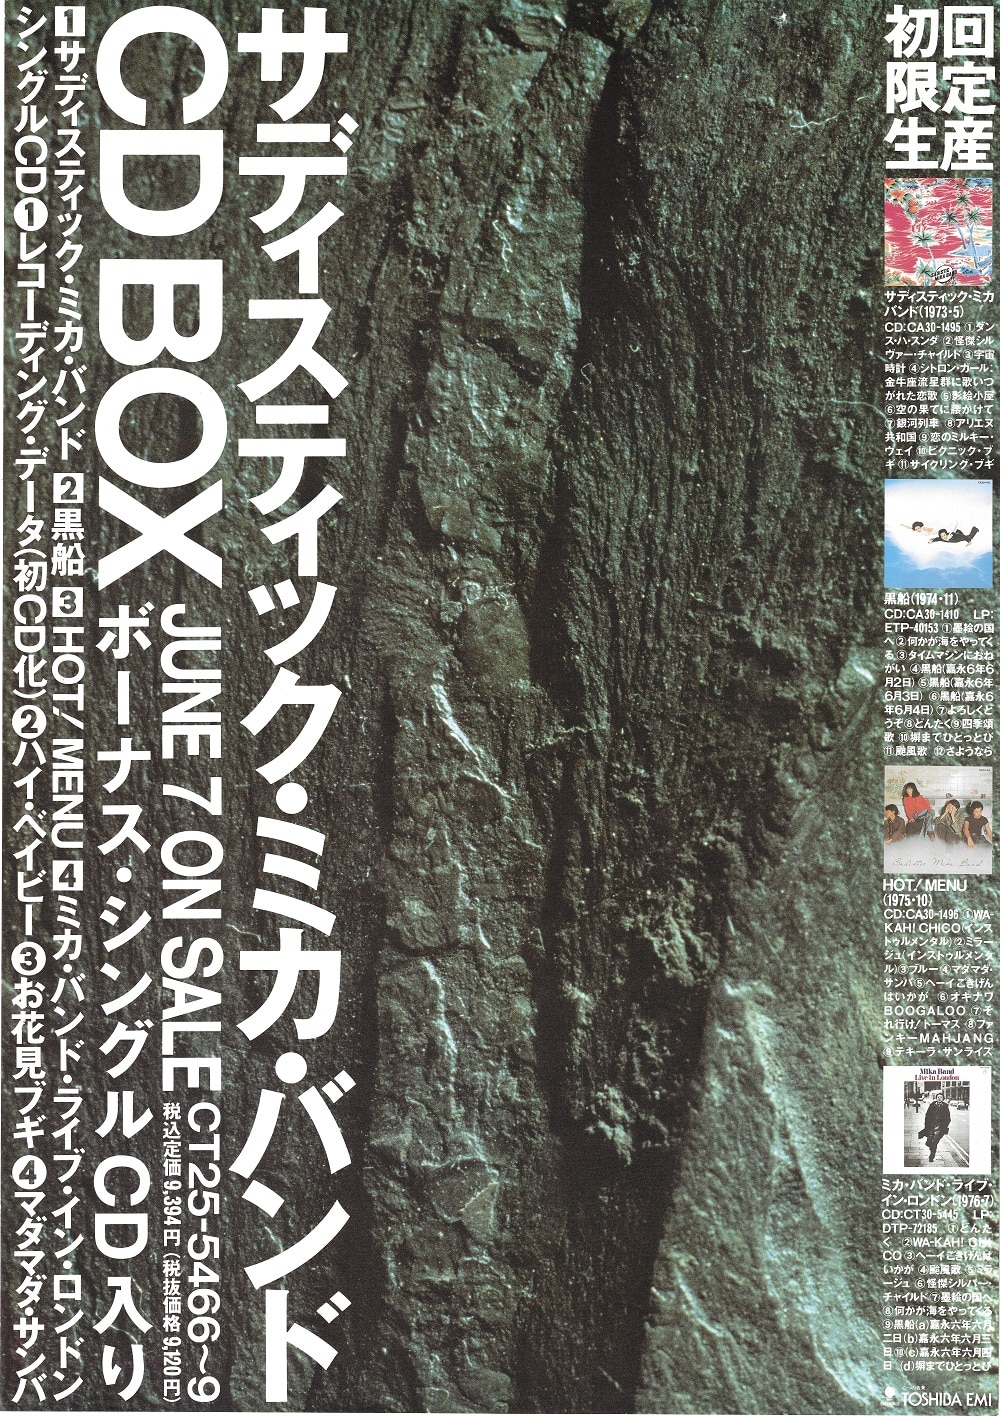 Sadistic Mika Band Box Cd B2 Poster Mandarake Online Shop